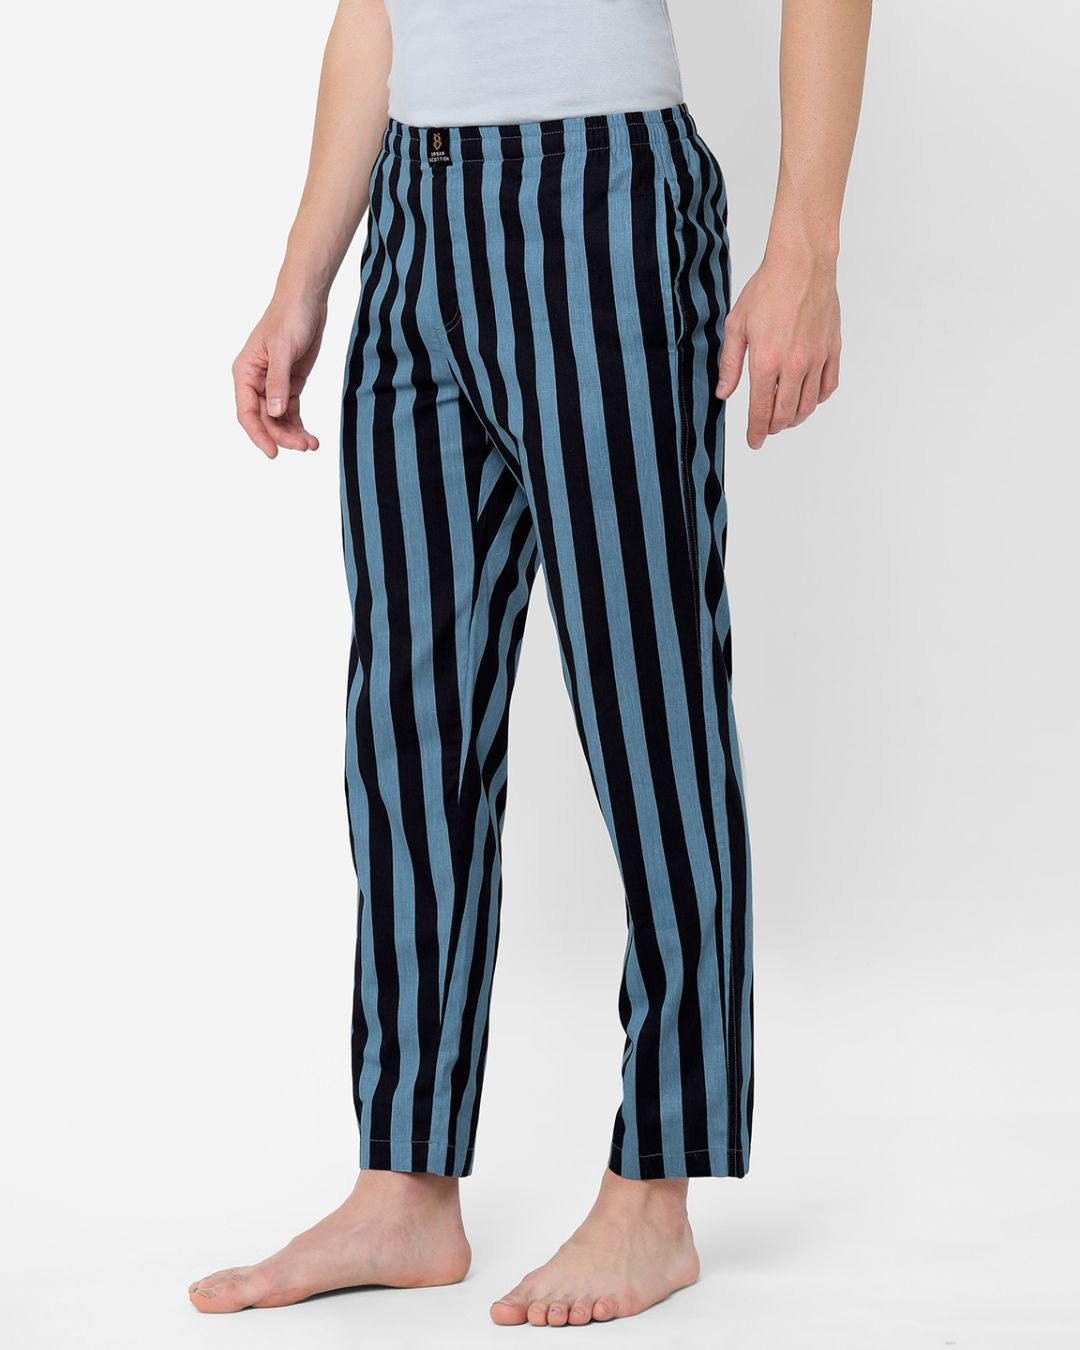 Men's Cotton Drawstring Sleep Lounge Pants Super Soft Pajama Bottoms  Housewear | eBay